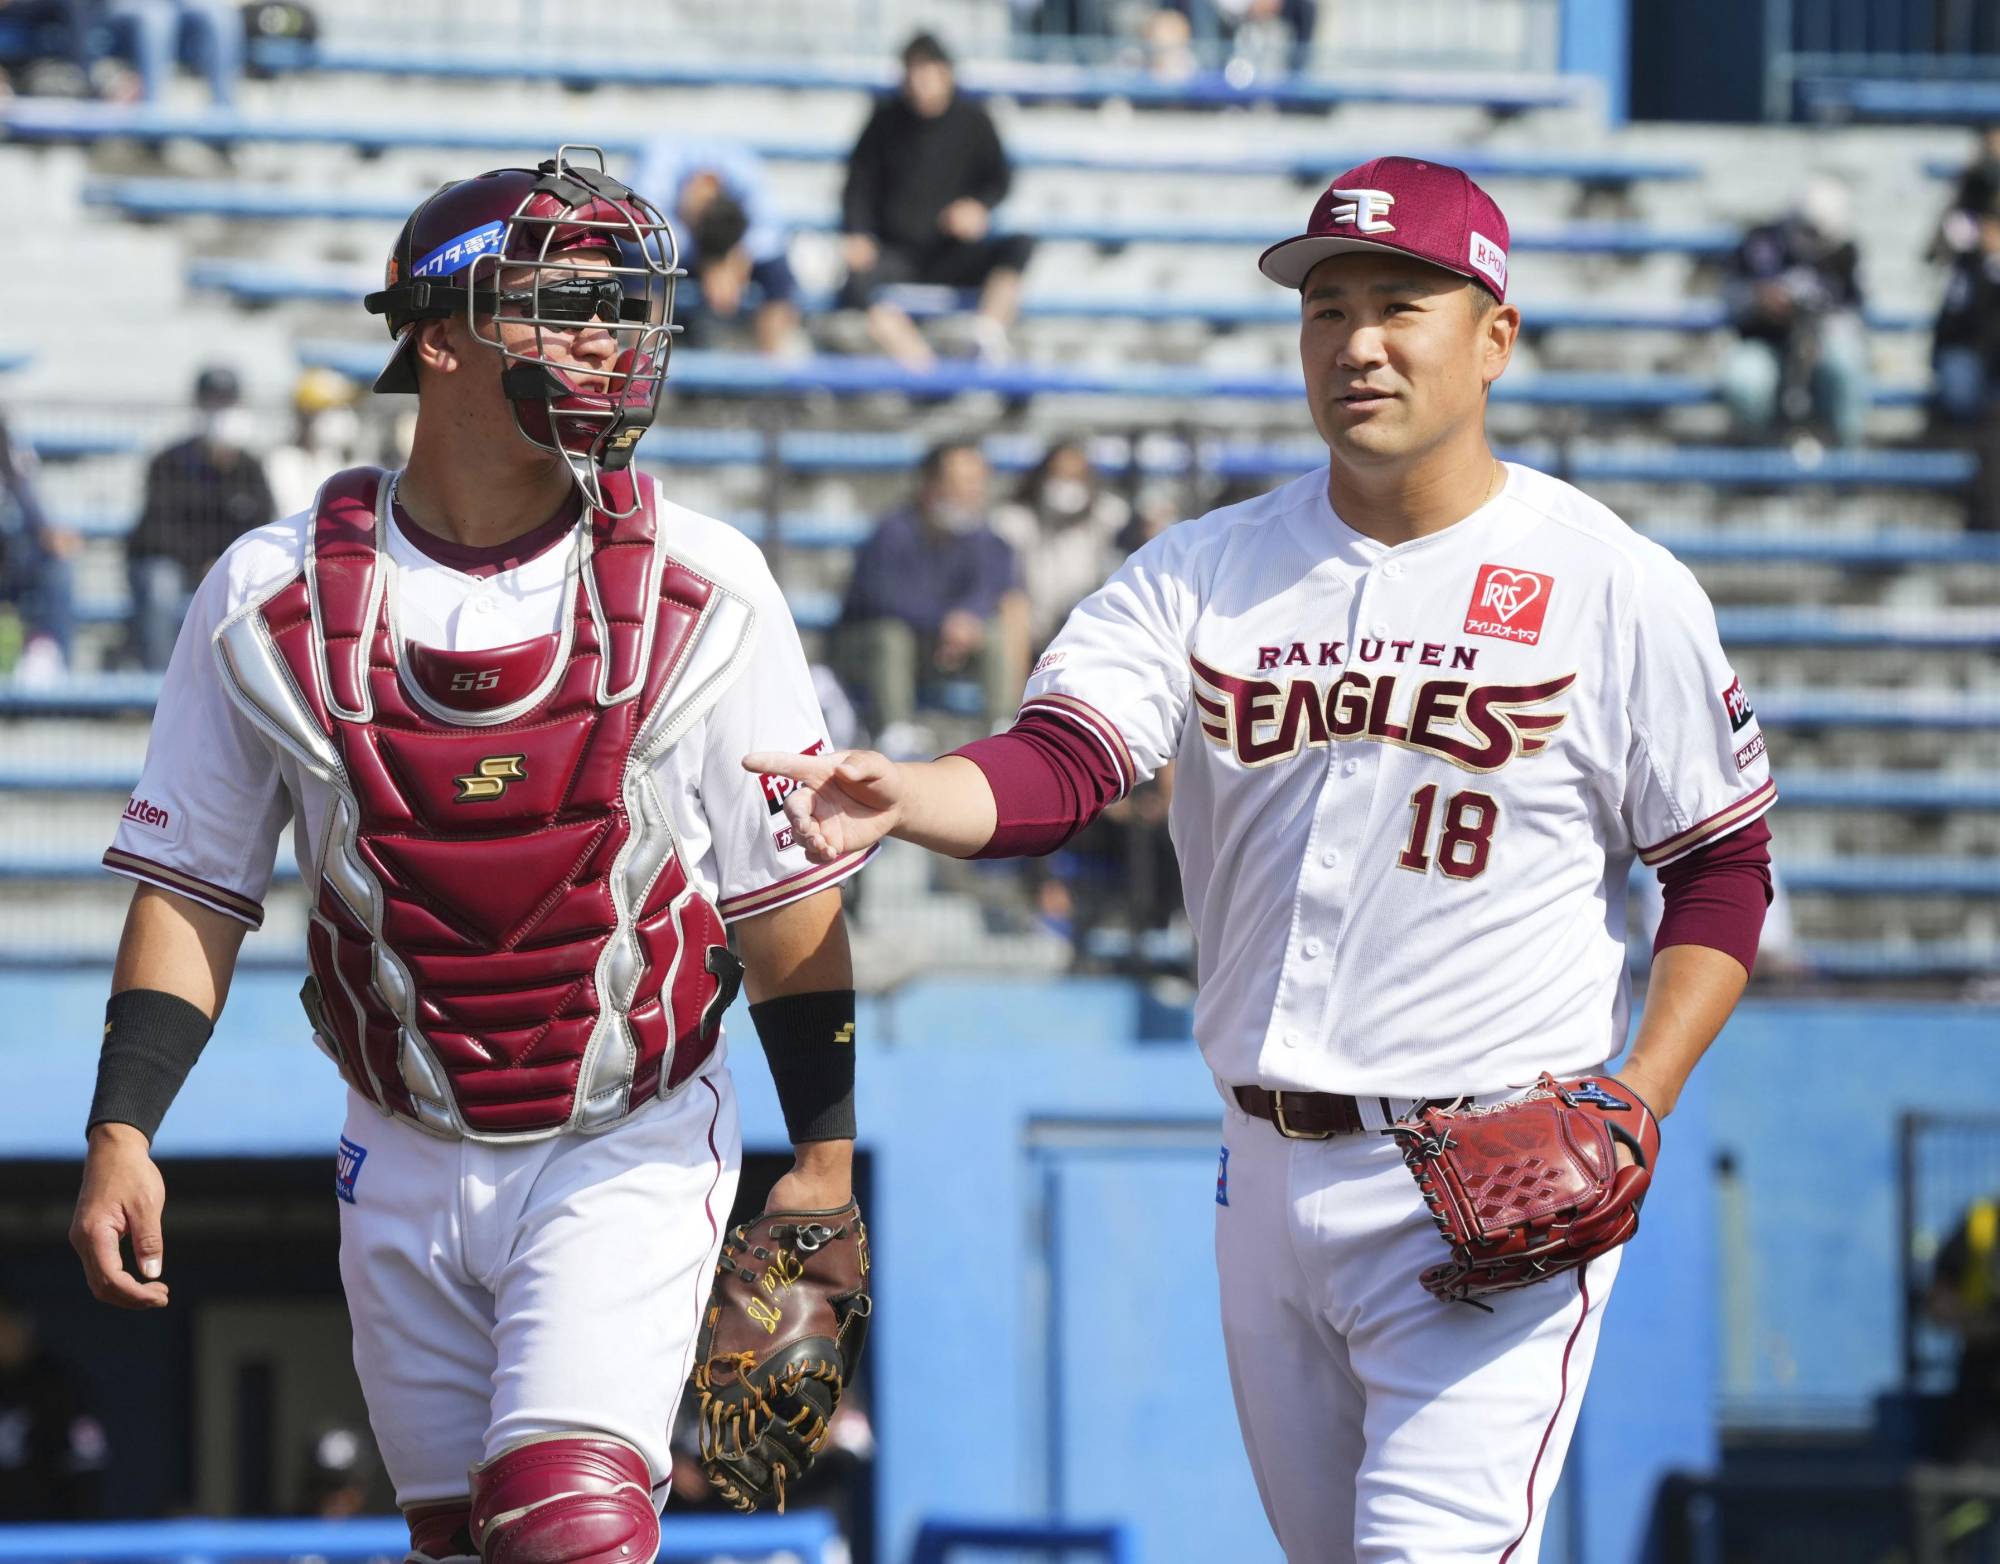 Baseball Pacific League collaborates with Fire Force – TSUBAKI